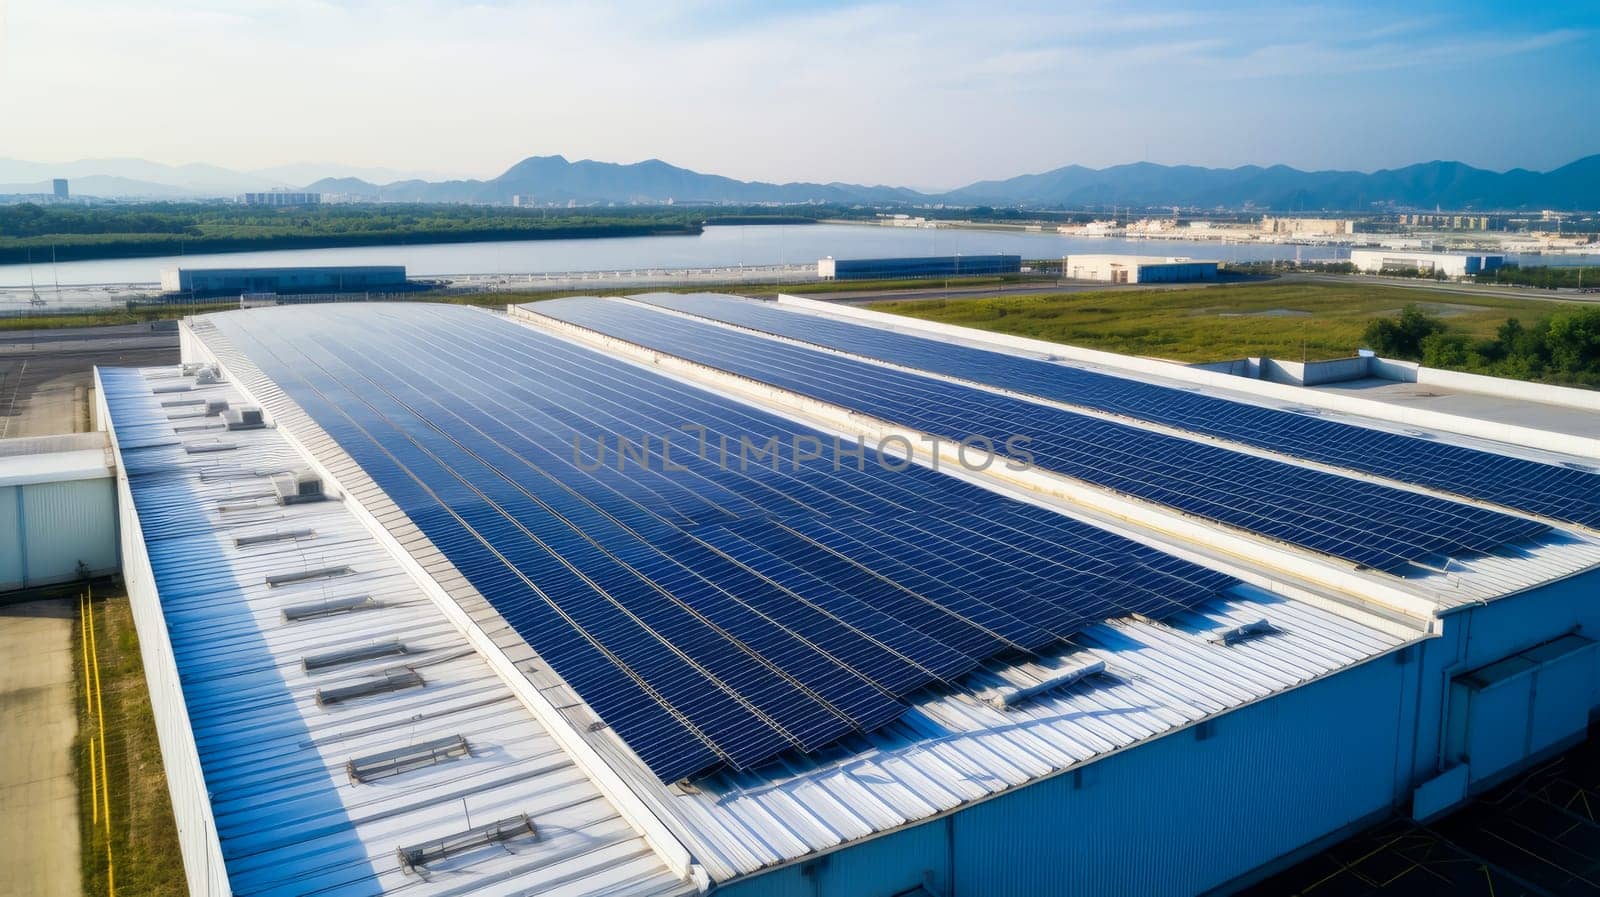 Solar panels outdoors, in production by Alla_Yurtayeva